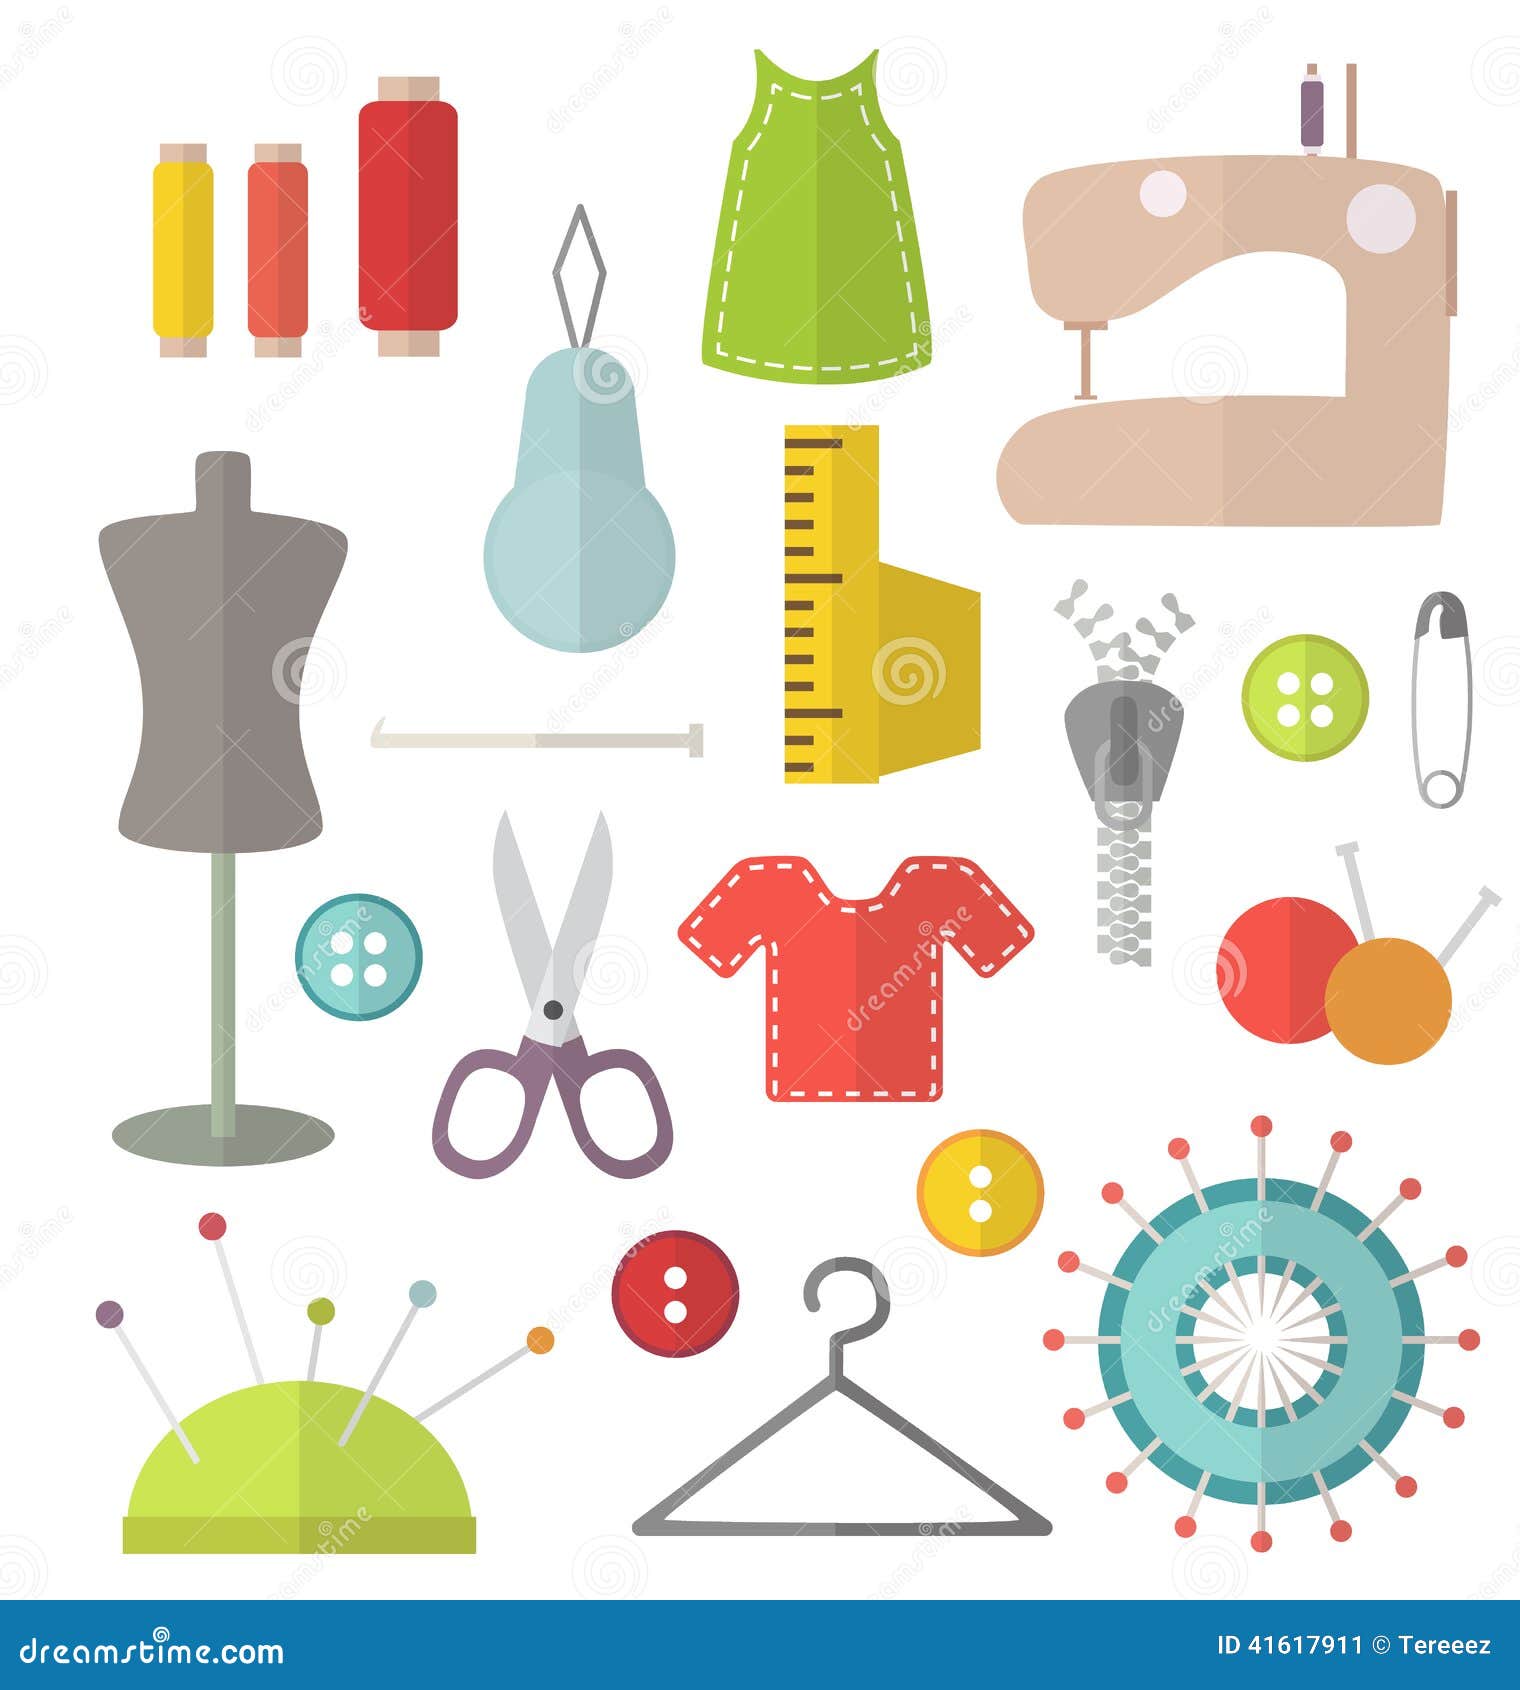 Sewing things stock illustration. Illustration of fashion - 41617911